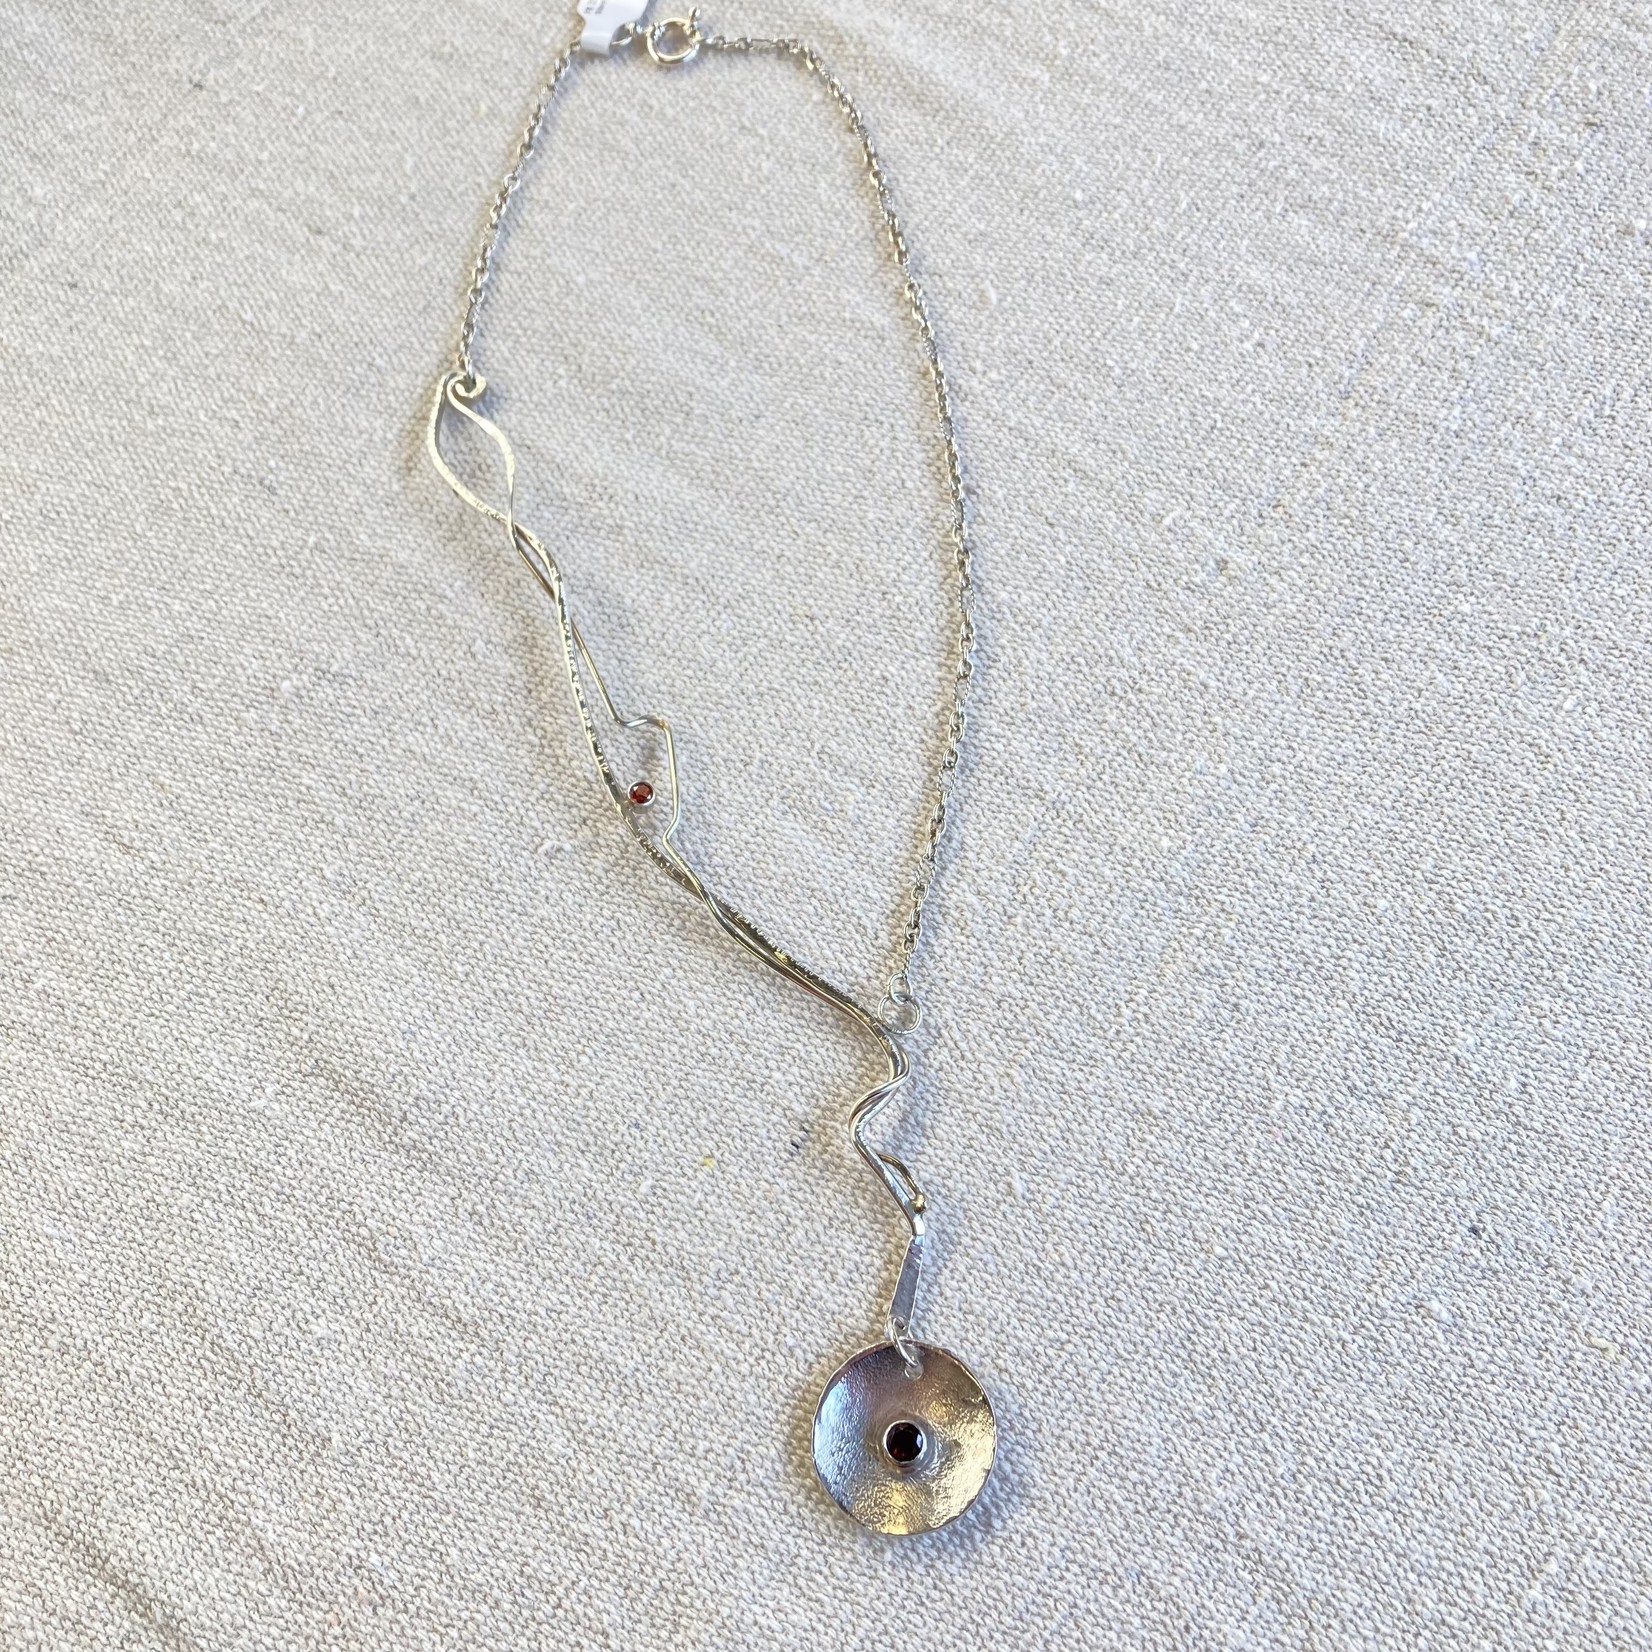 Fishbone Designs FB Sterling Necklace with Garnet #2080